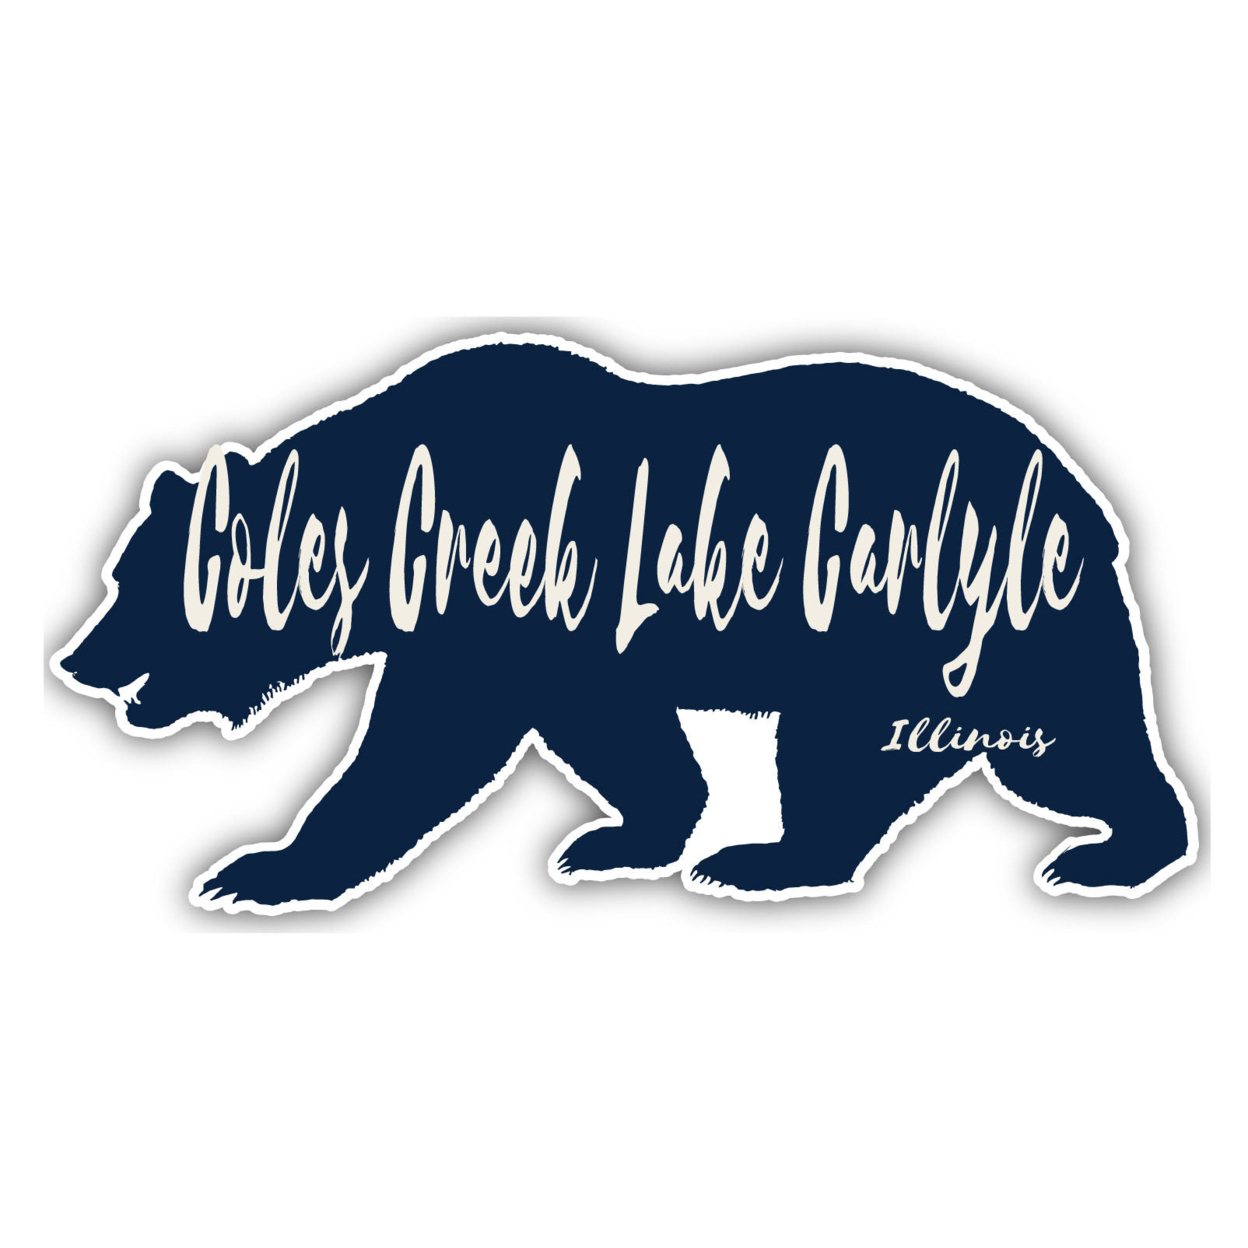 Coles Creek Lake Carlyle Illinois Souvenir Decorative Stickers (Choose Theme And Size) - Single Unit, 2-Inch, Bear